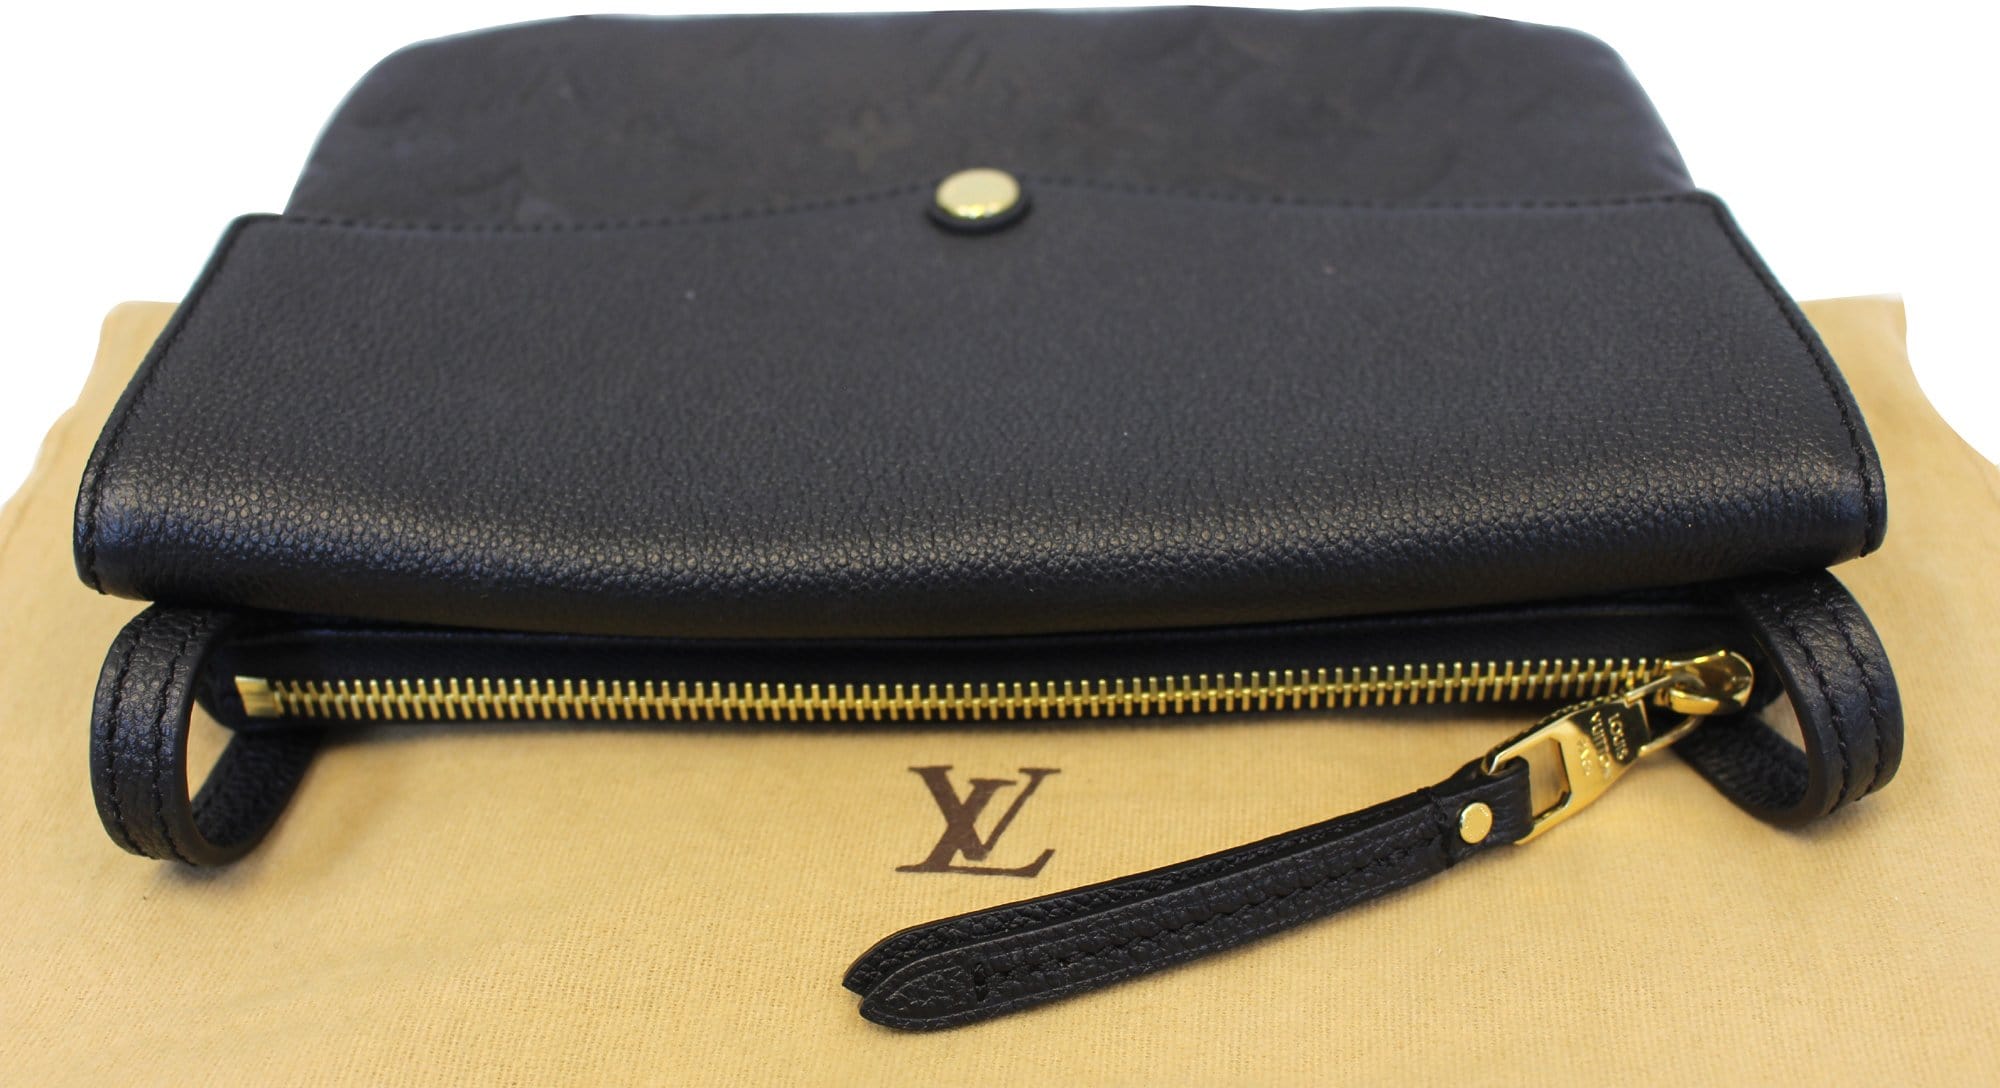 Louis Vuitton Twice Twinset Bag